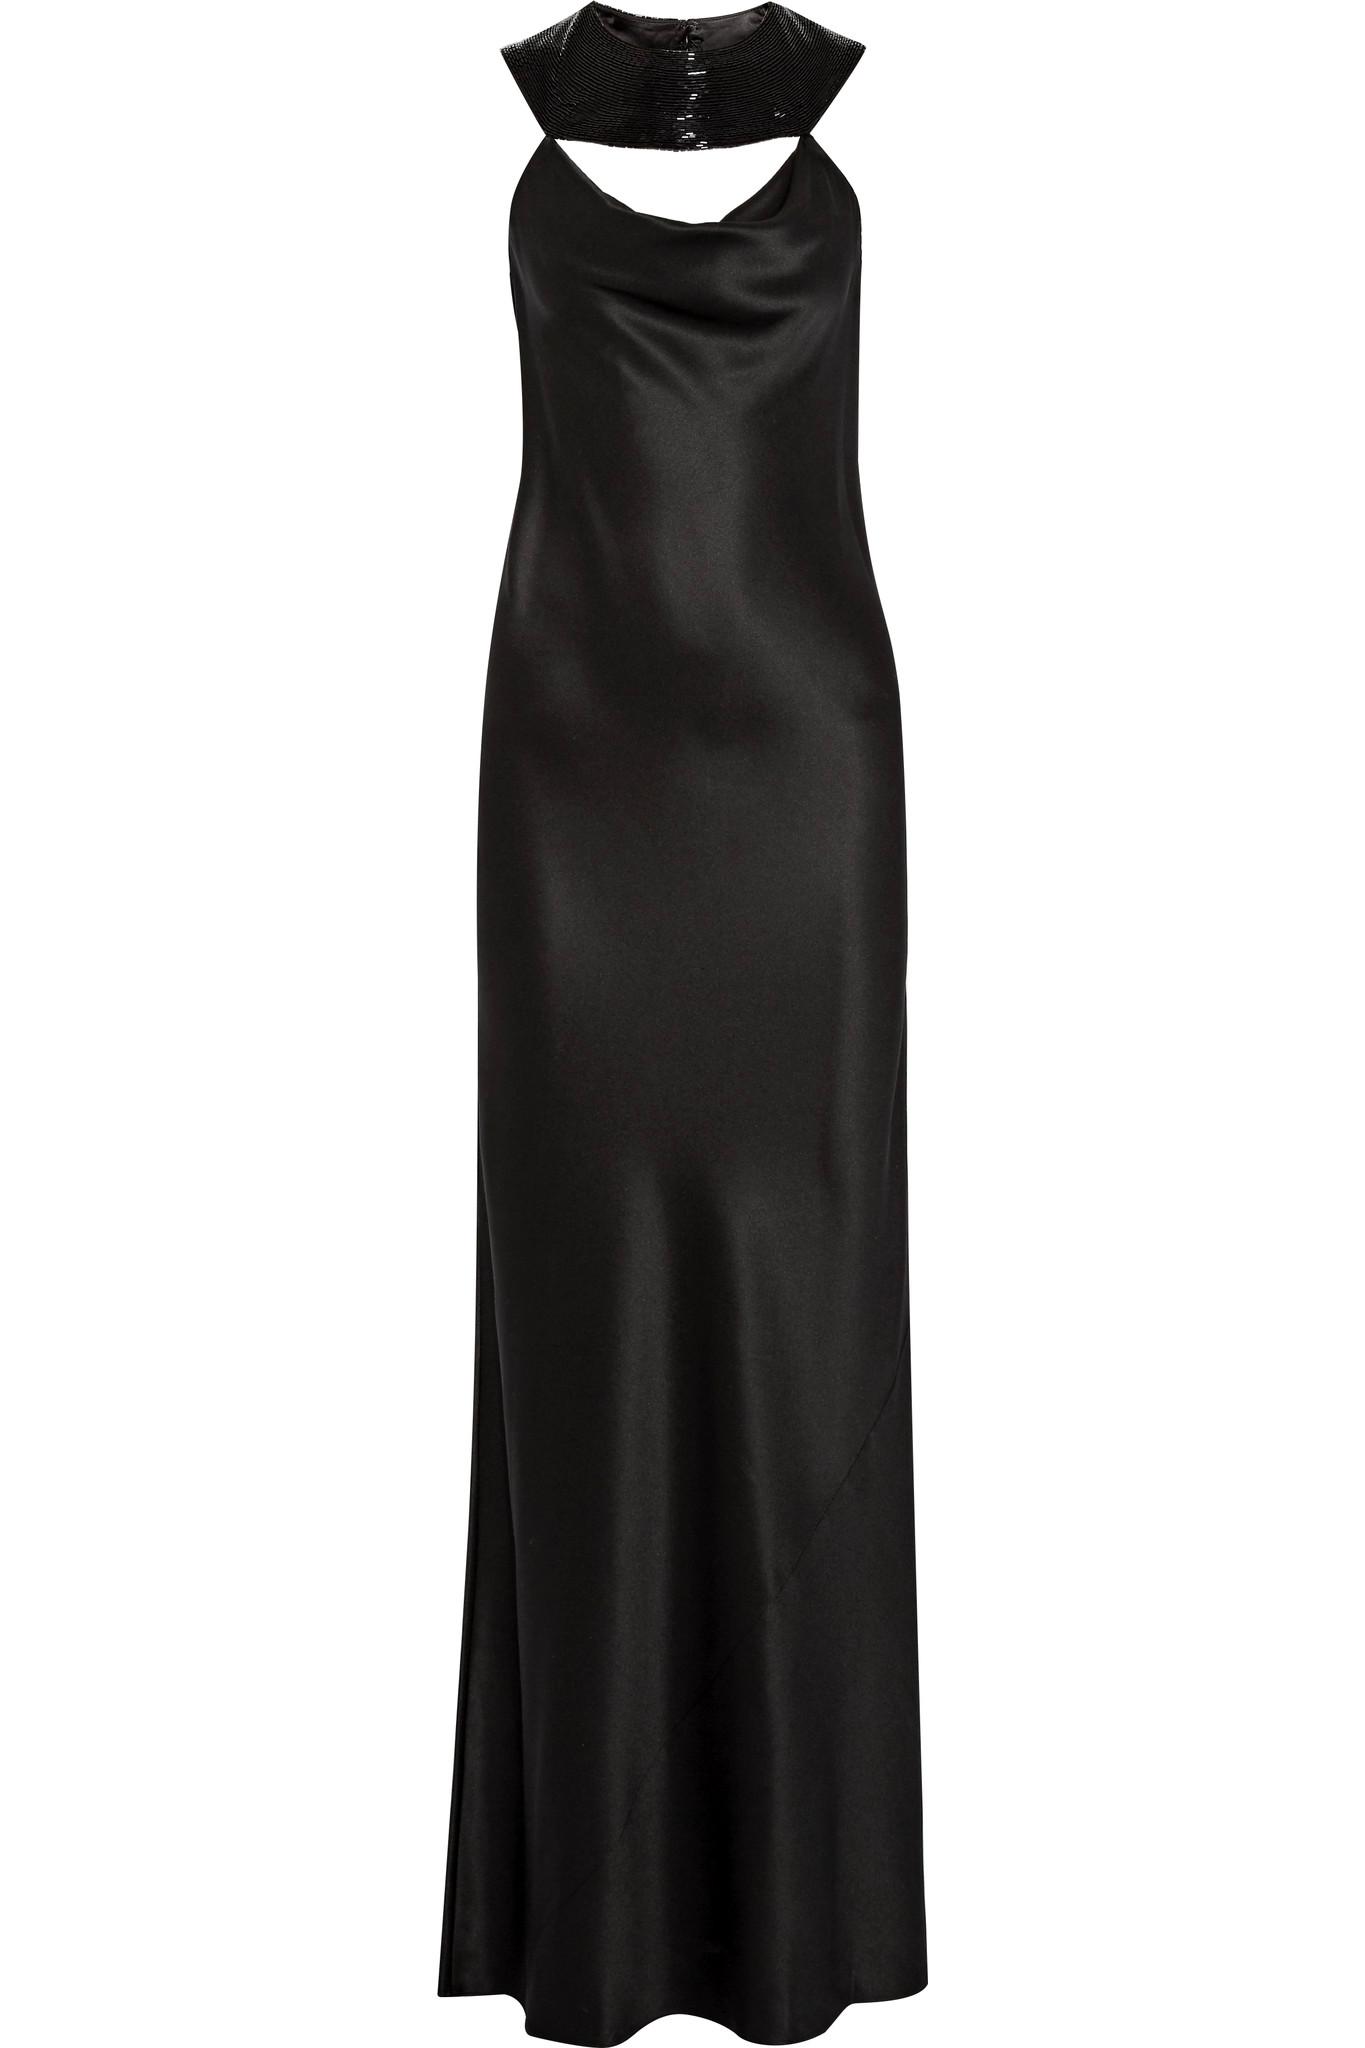 Lyst - Cushnie Et Ochs Lily Bead-embellished Silk-charmeuse Gown in Black